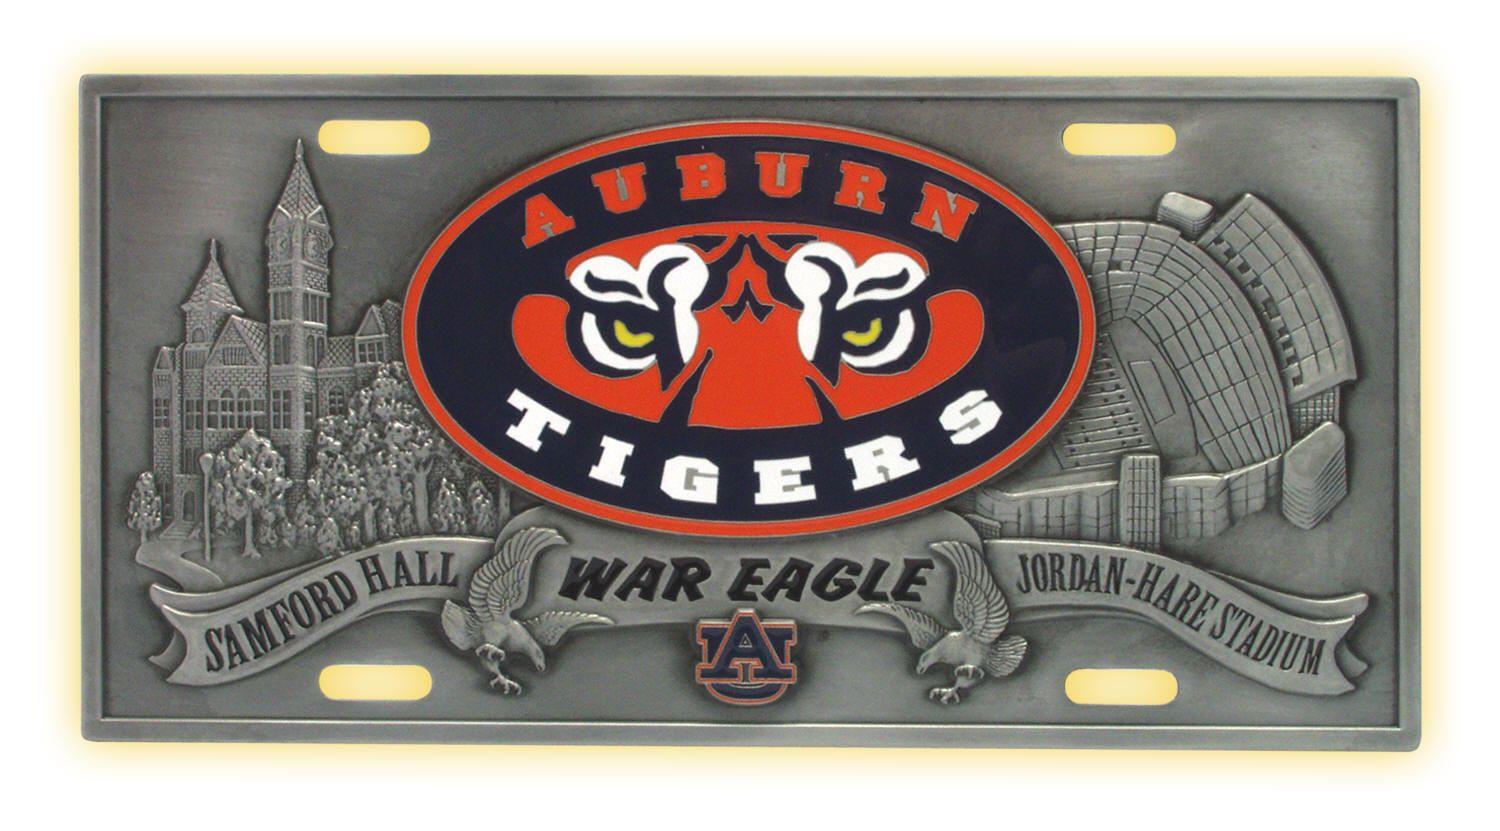 Best image about Auburn University. Sports logos